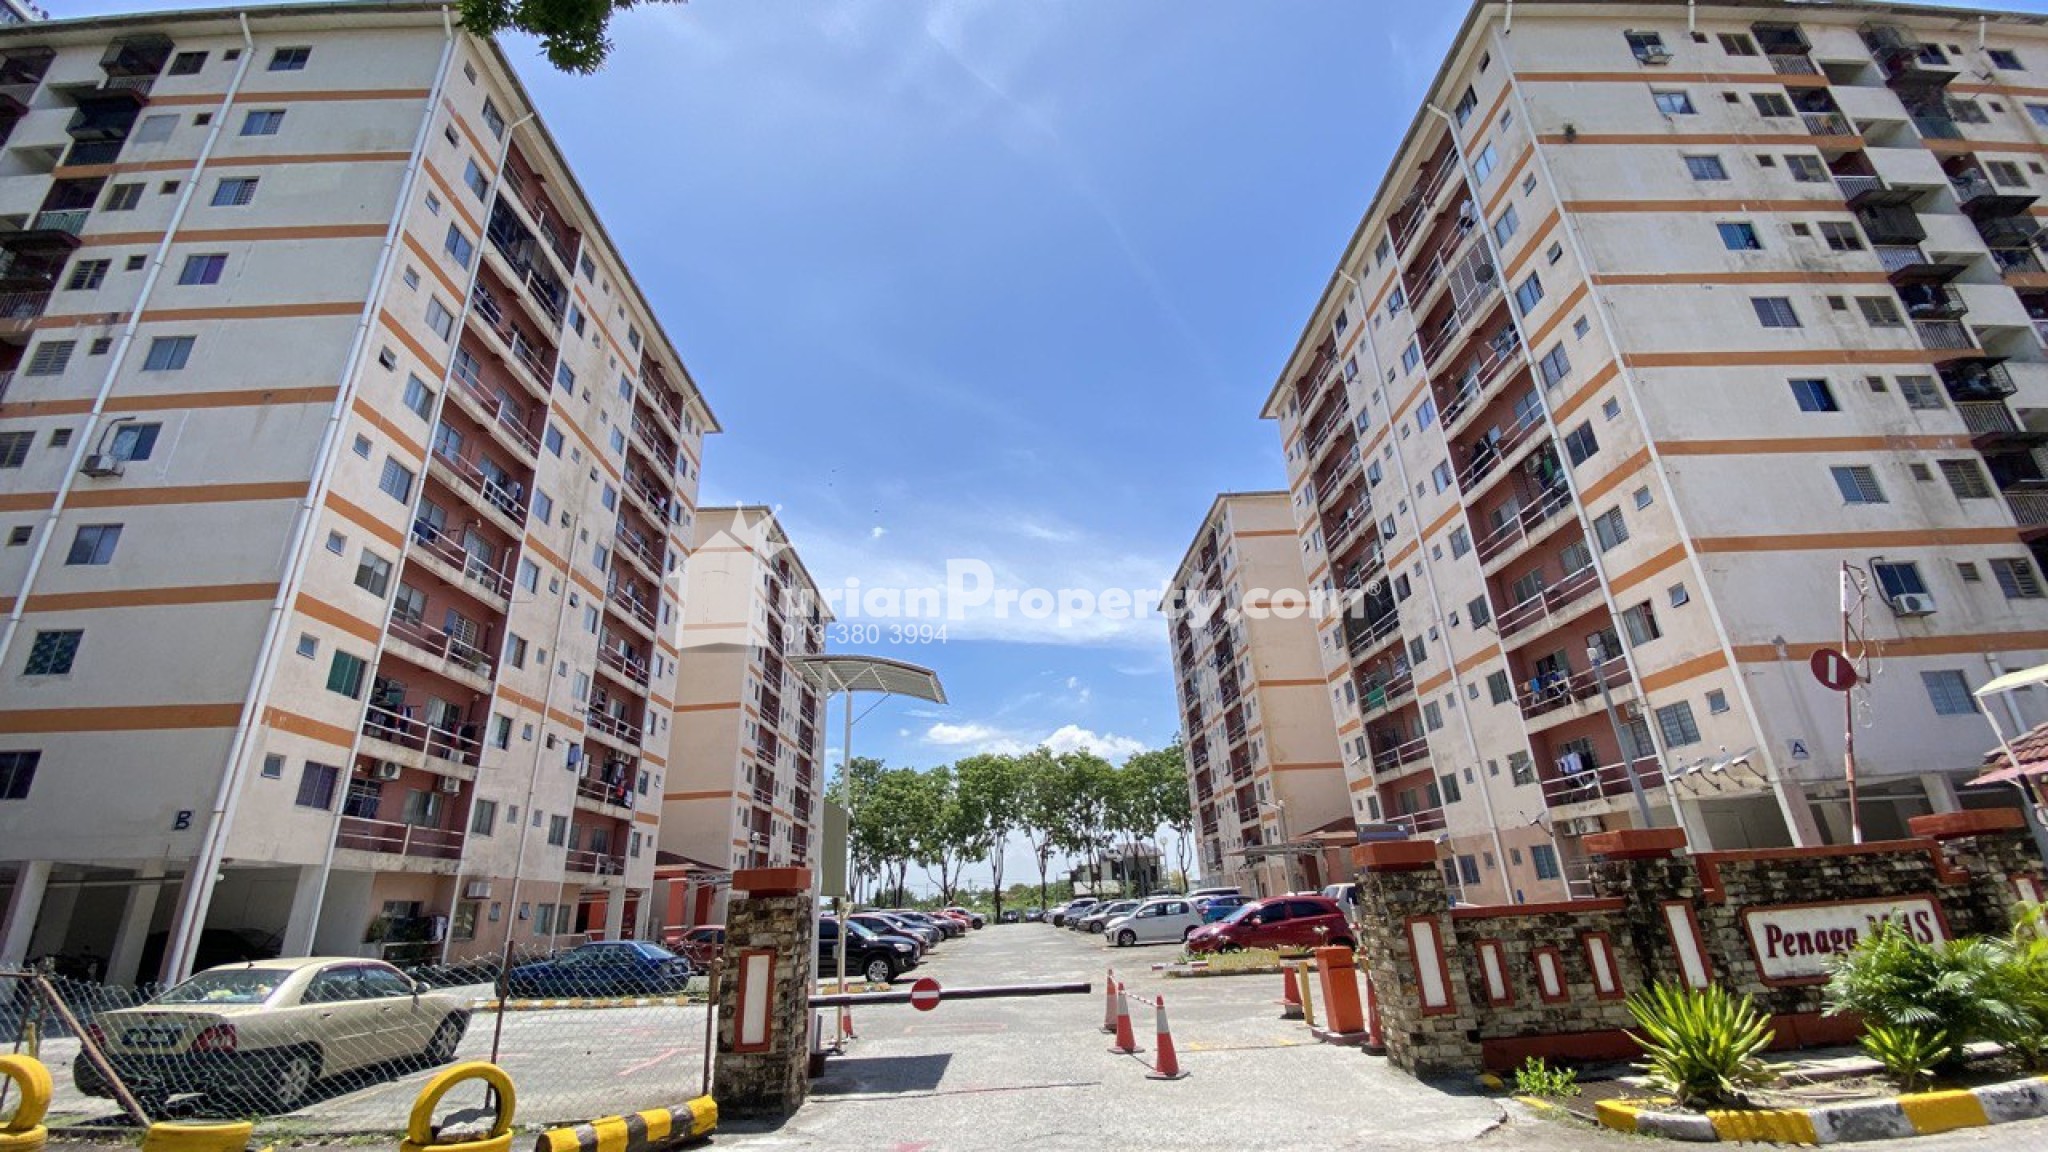 Apartment For Sale at Penaga Mas